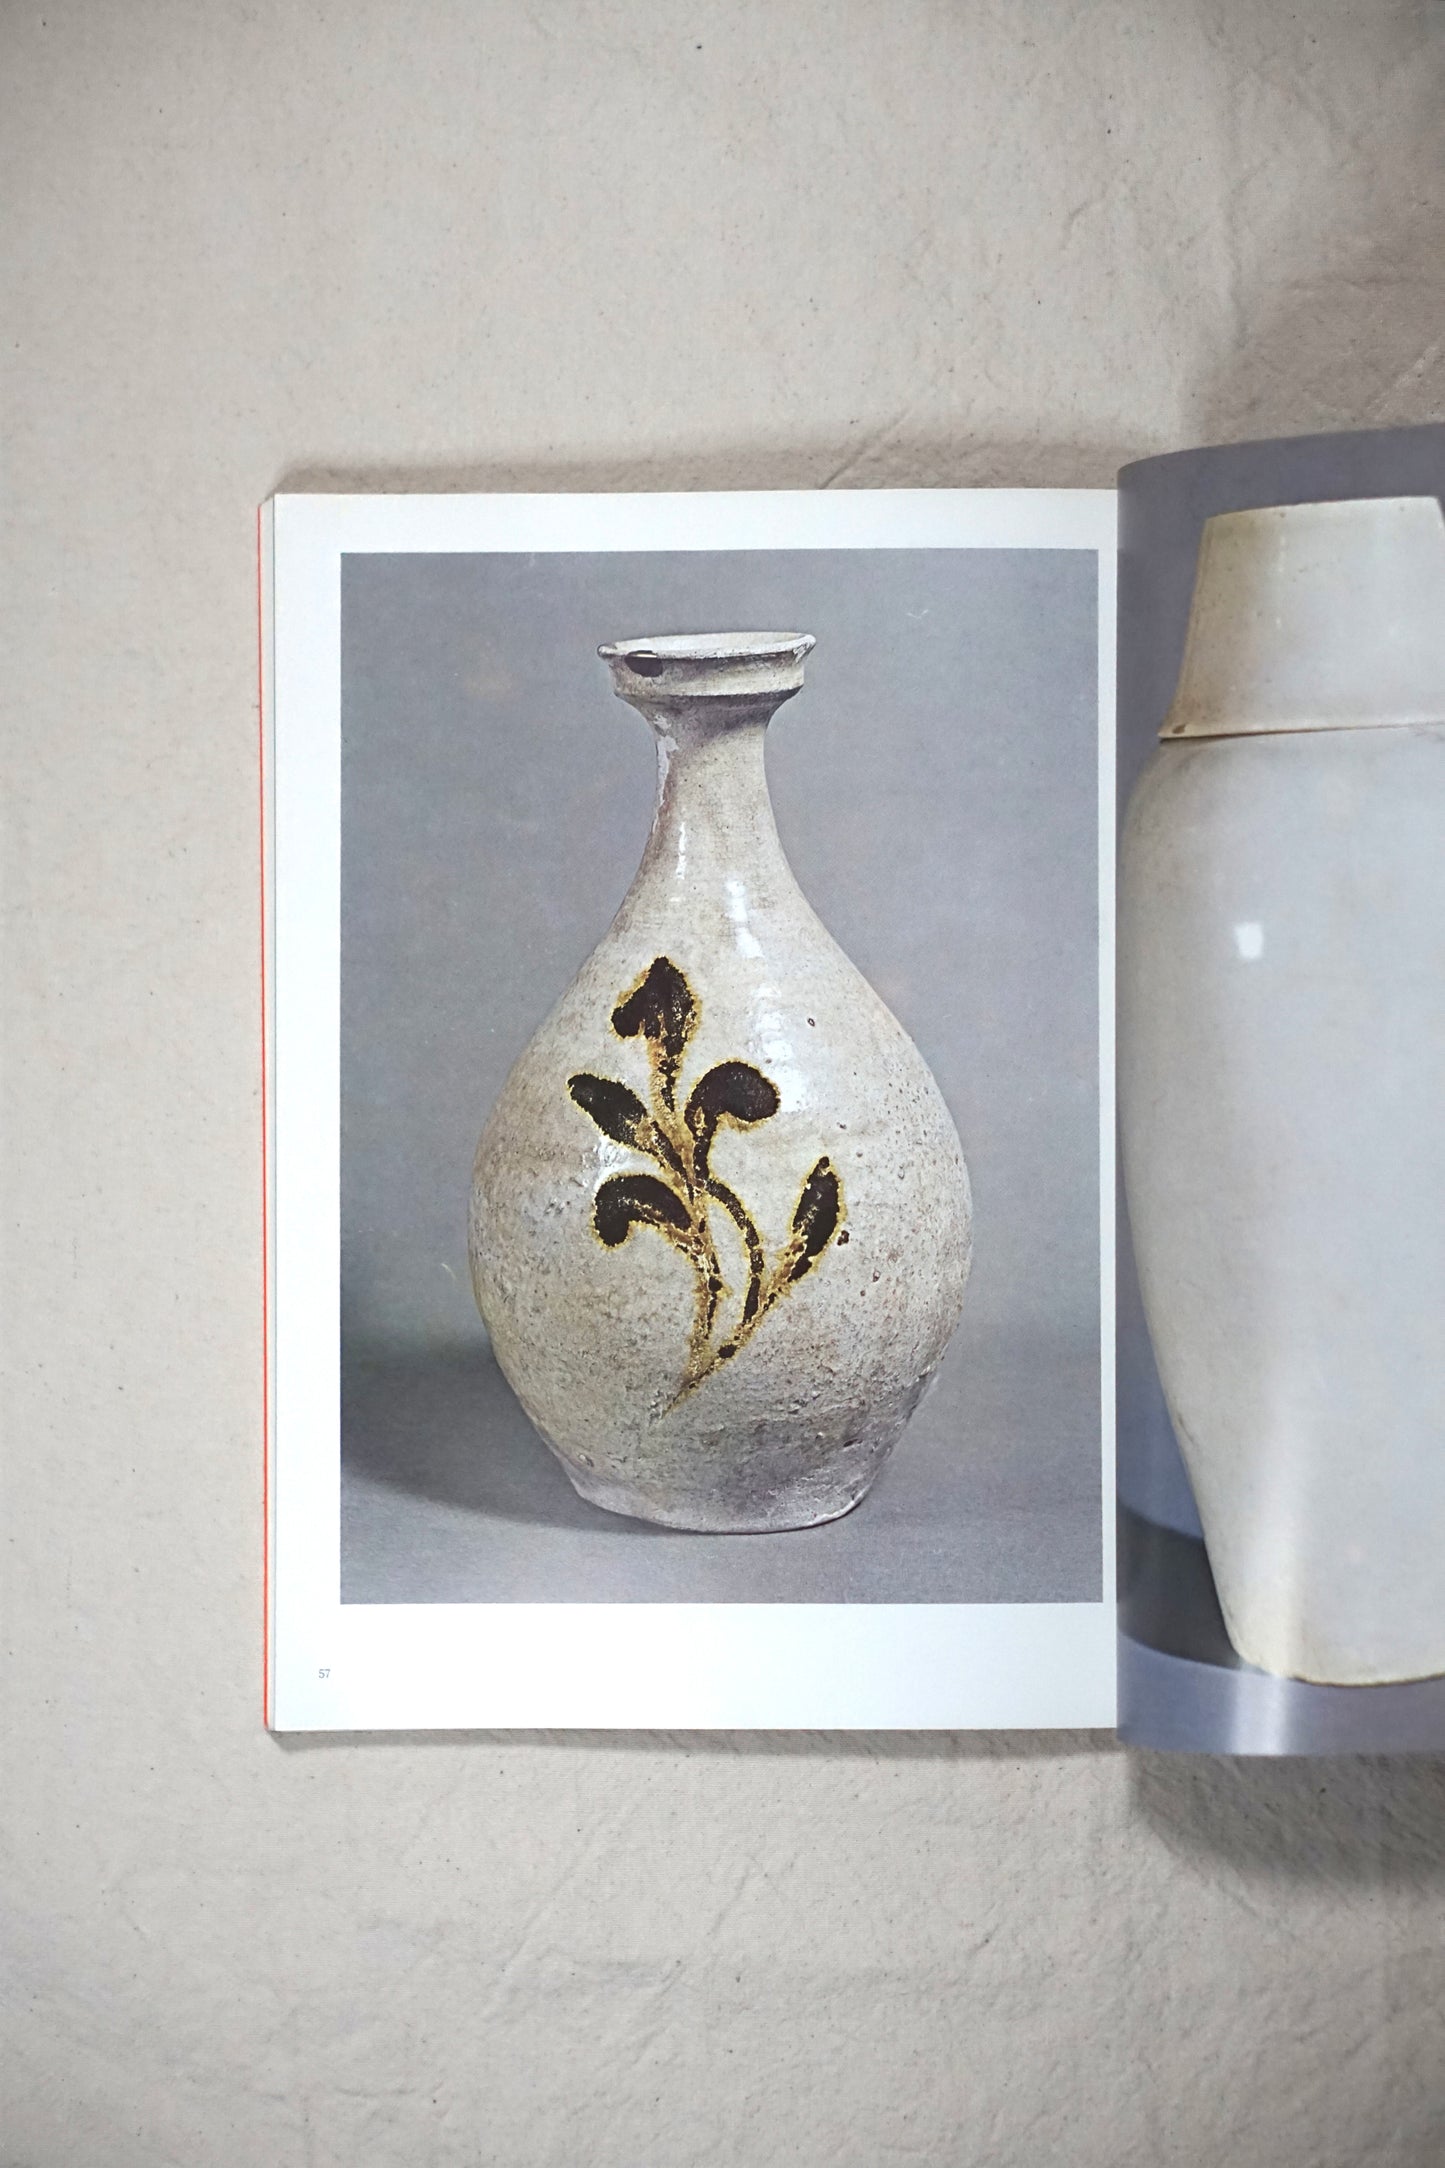 Goryeo Dynasty Ceramics Treasured Edition